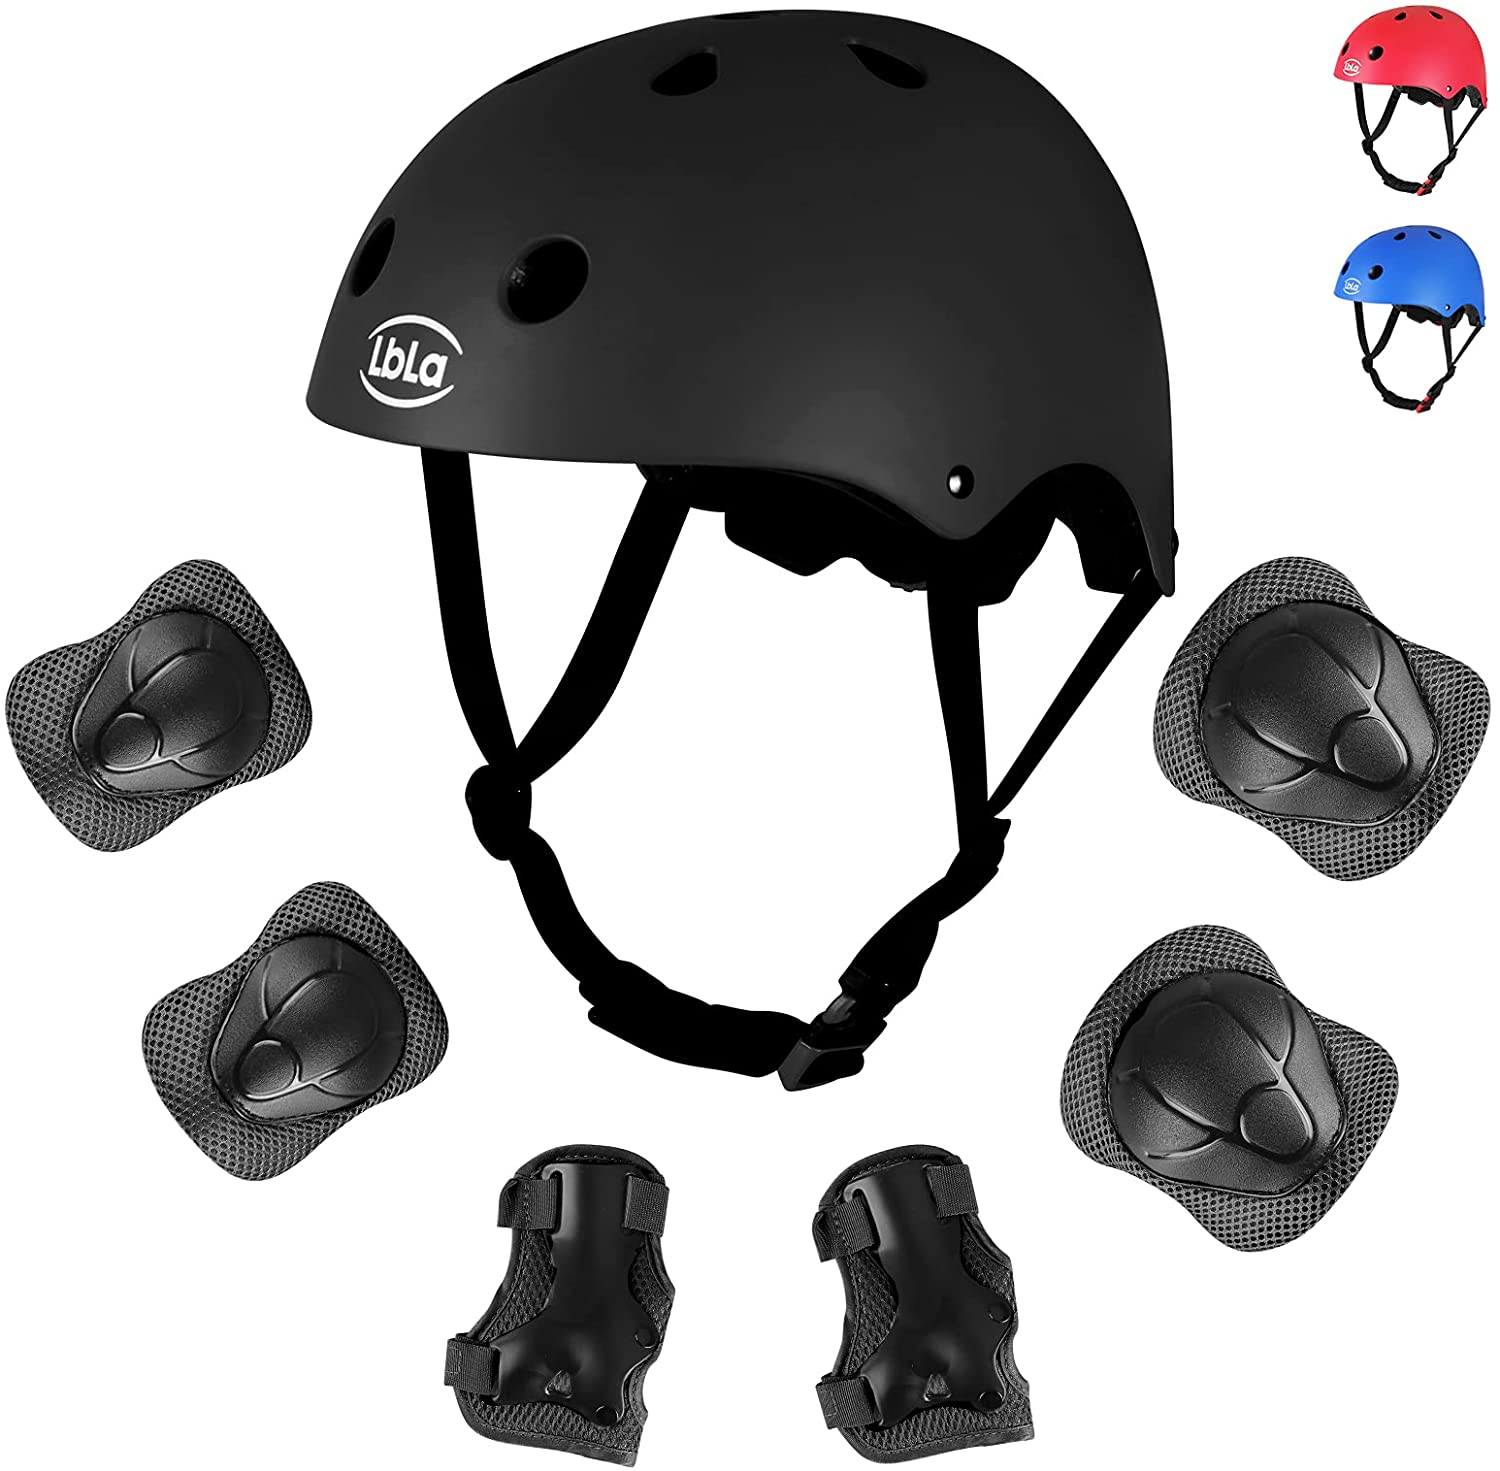 Reasonable price for No Brake No Pedal Walk Push Balance Bike For Kids - LBLA Kids Bike Skateboard Helmet,Helmet and Pads Protect Head Knee Elbow and Wrist,7 Pcs Adjustable Protective Gear Set for...